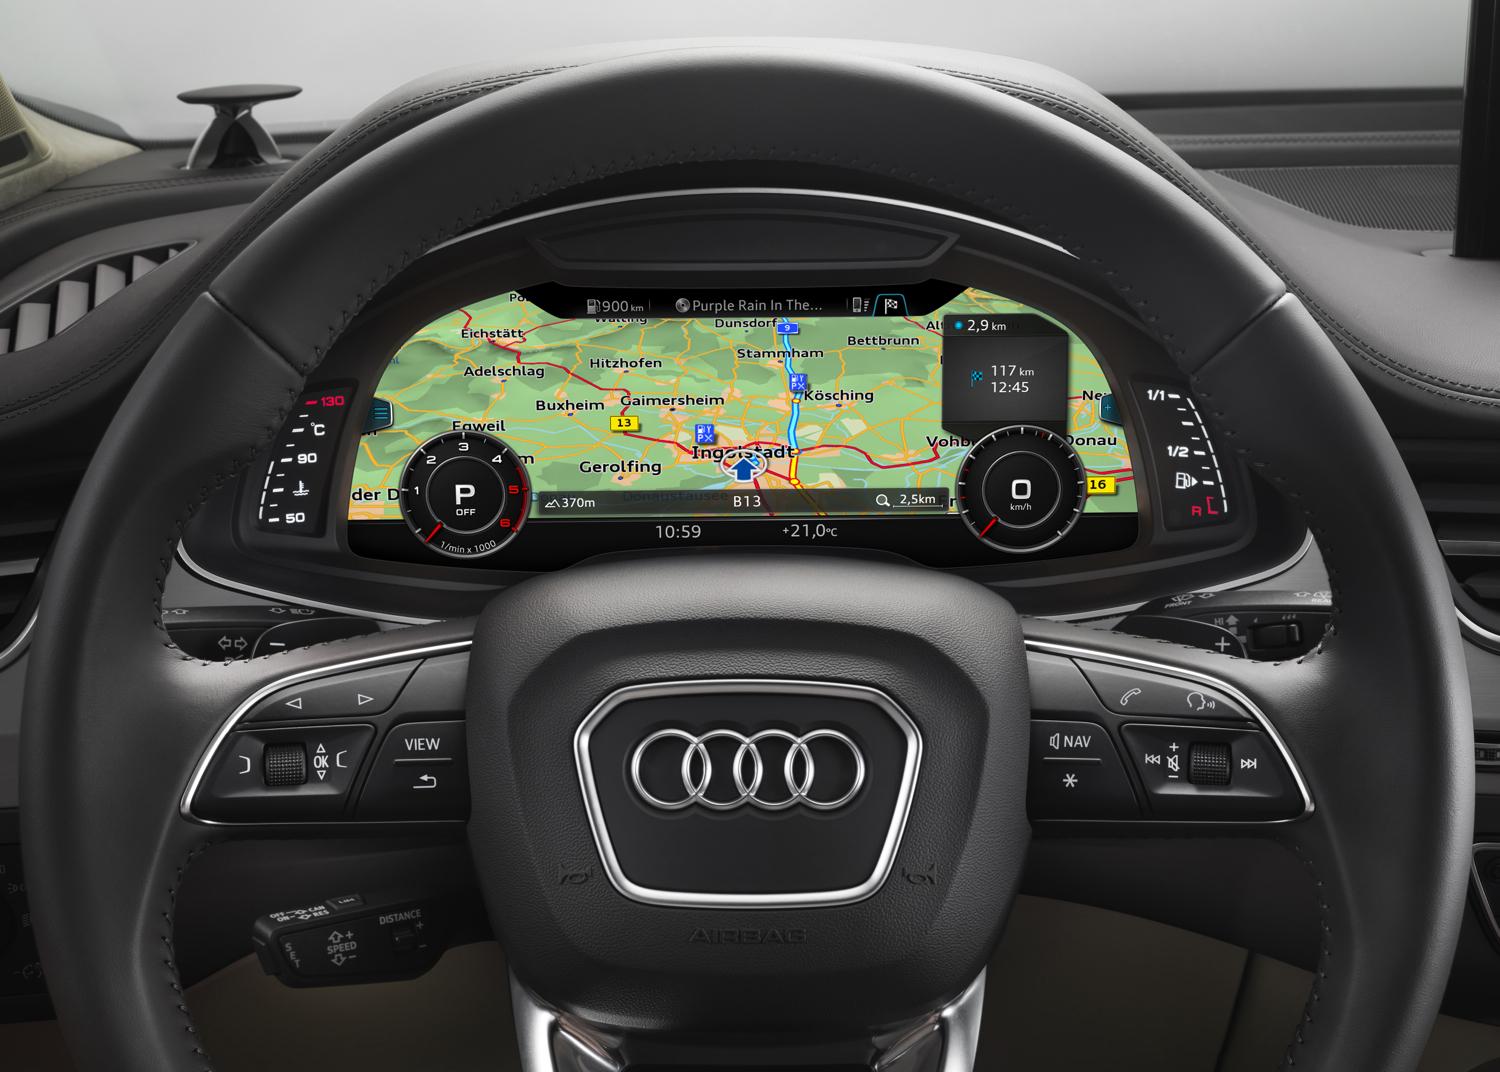 2016 Audi Q7 virtual cockpit